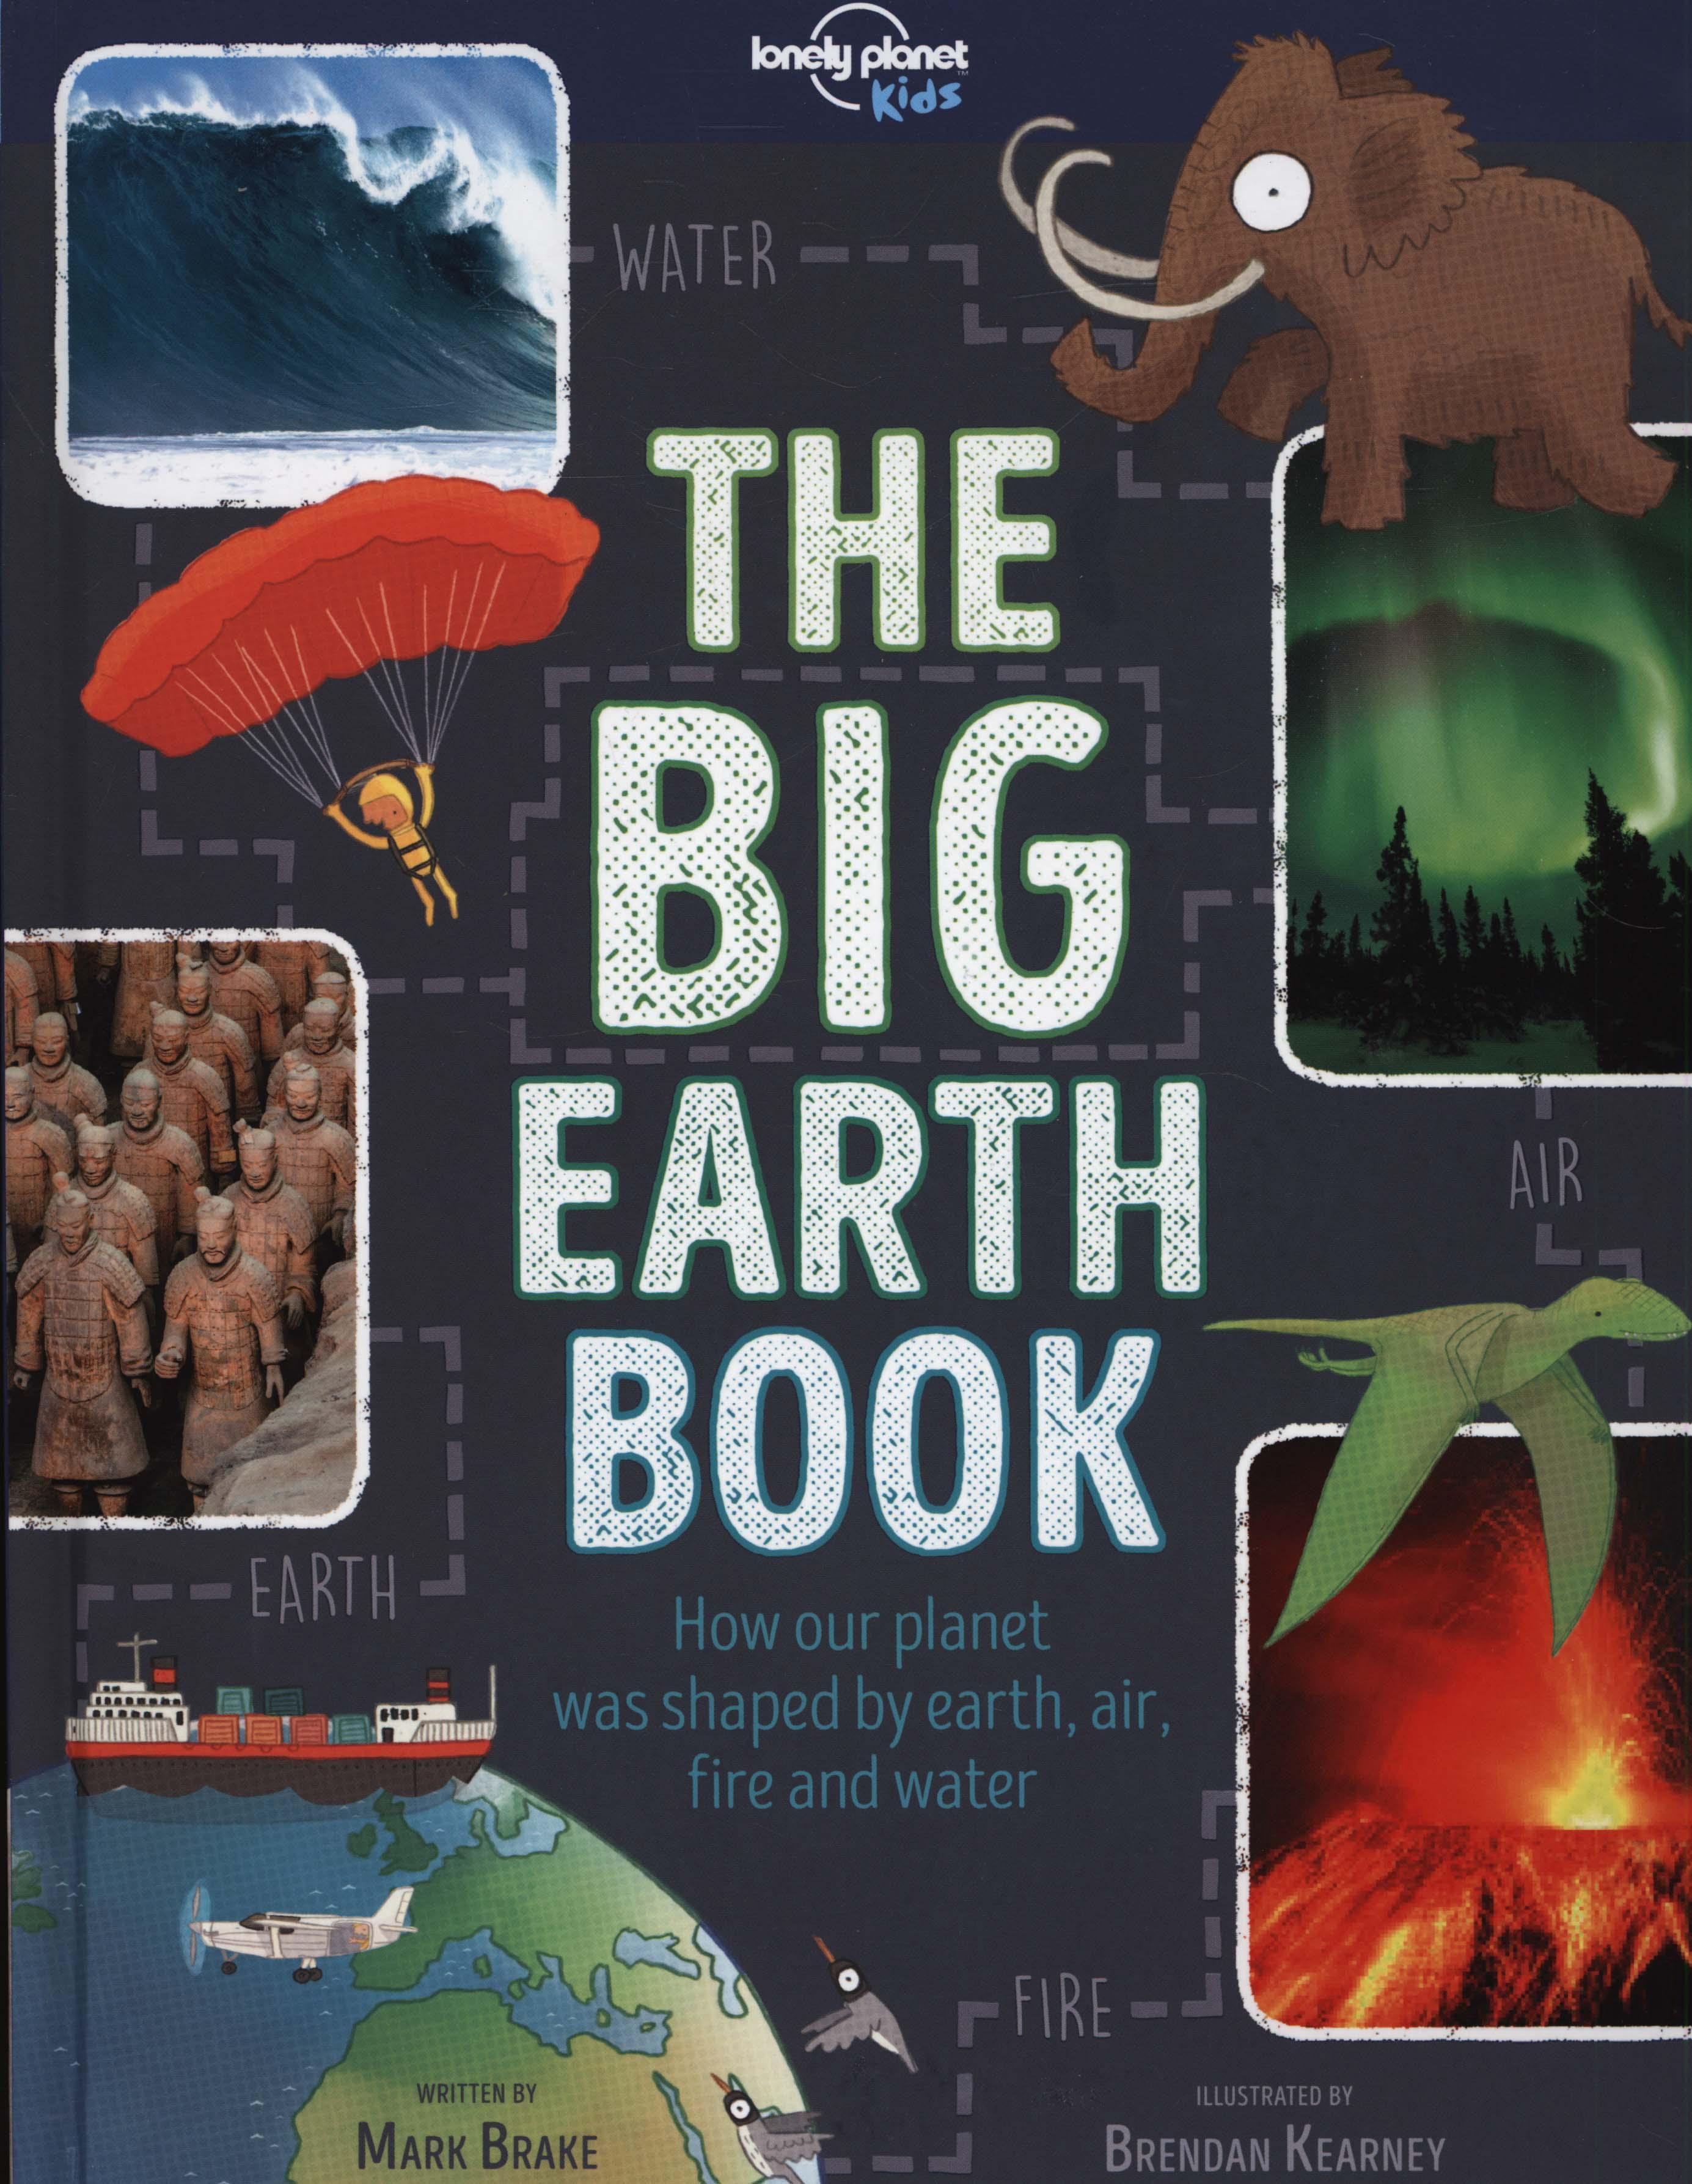 Big Earth Book